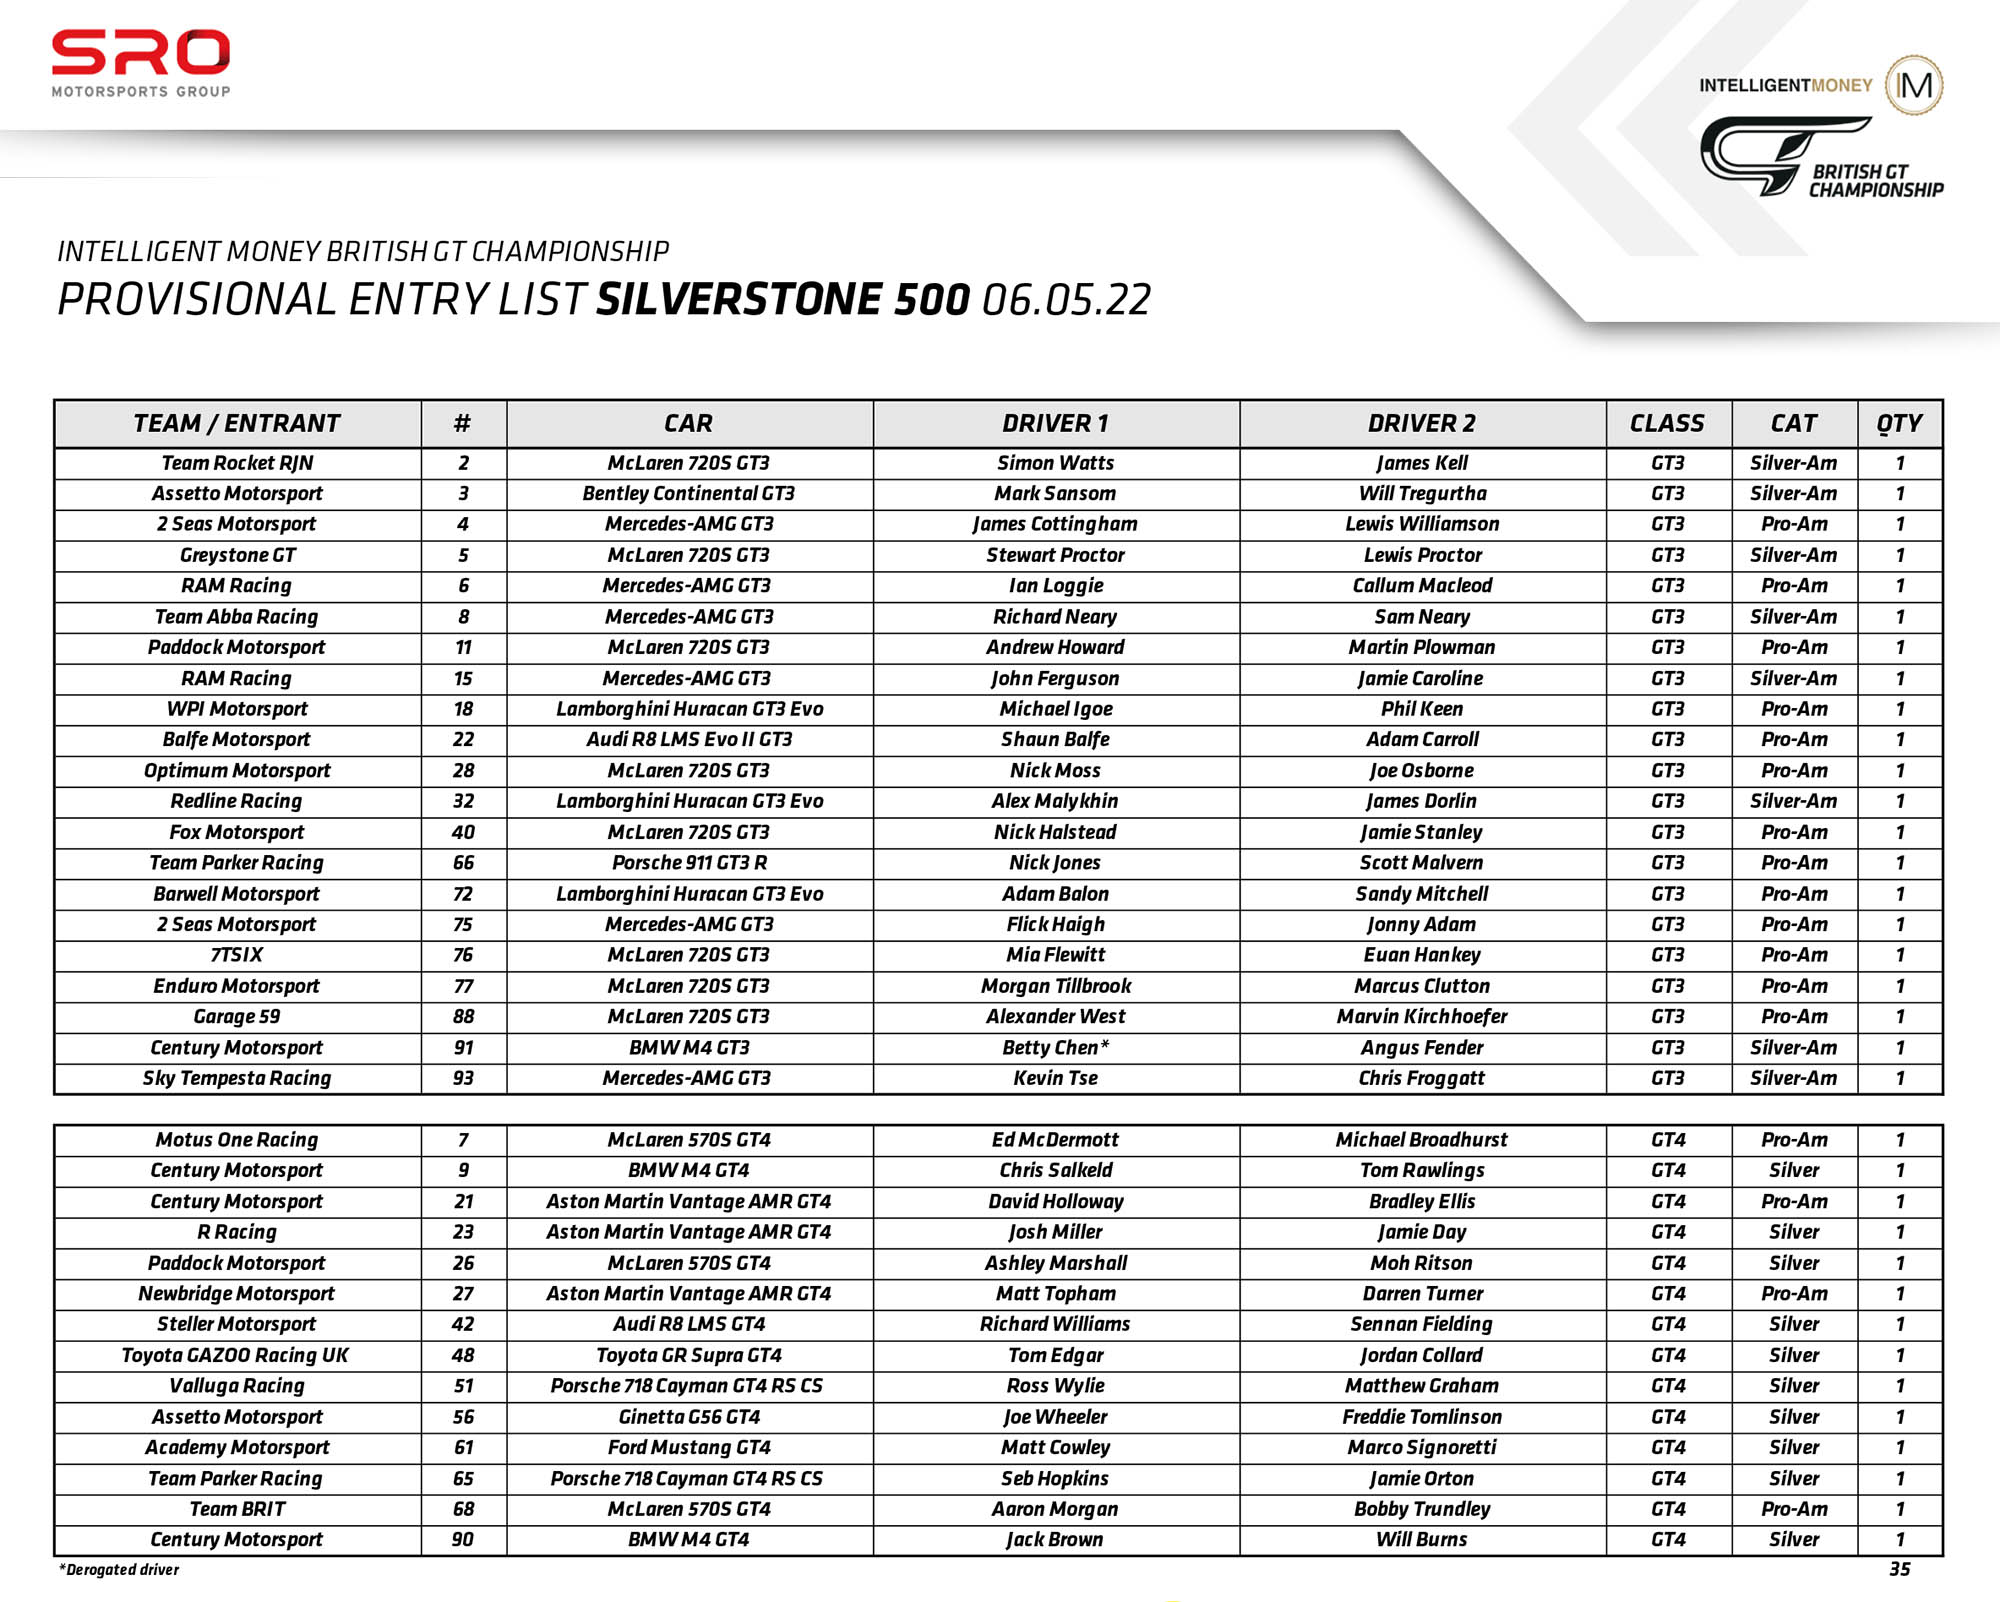 Silverstone 500 Entry List